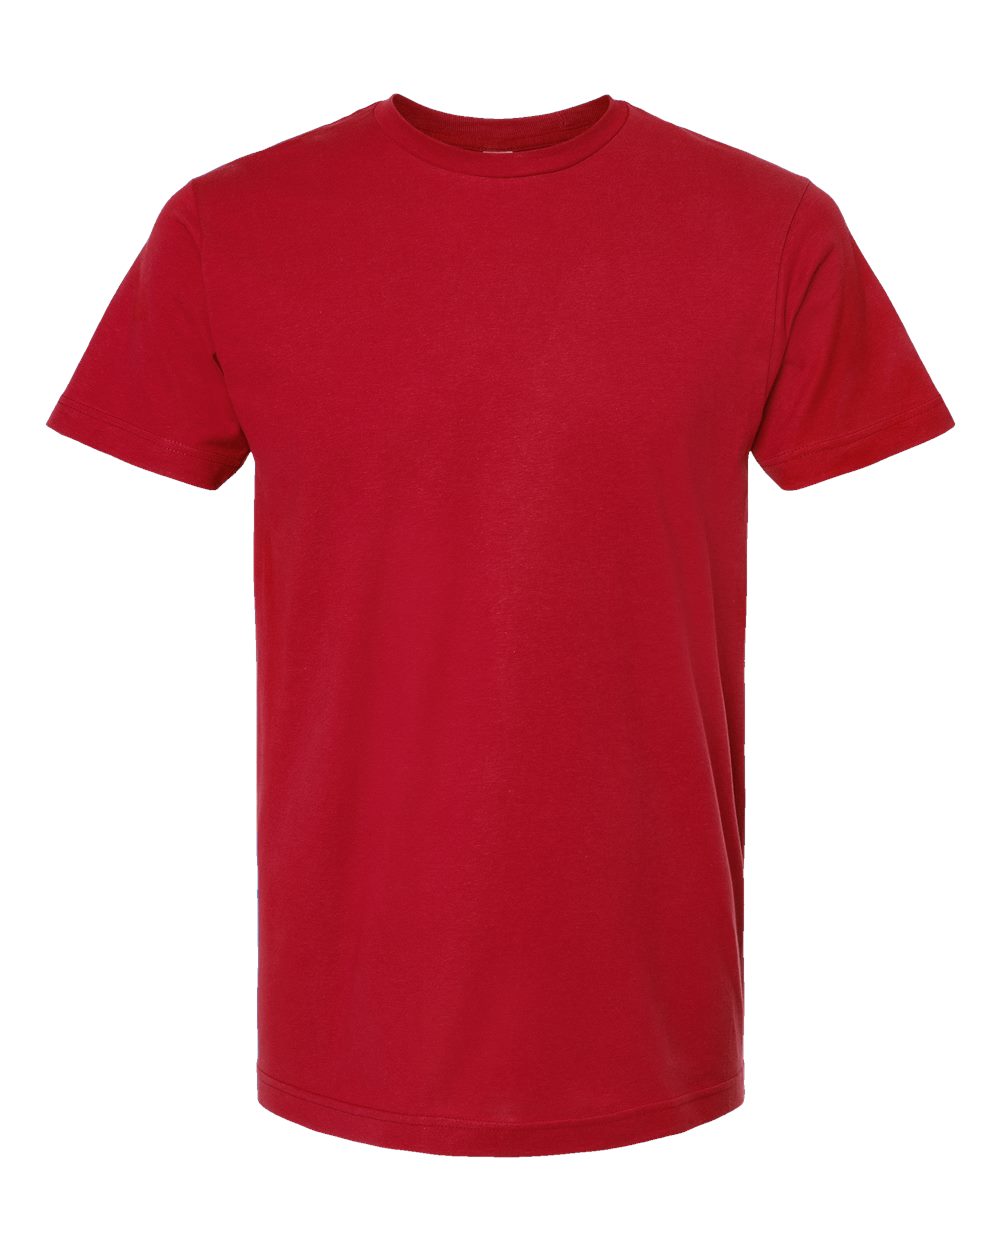 Pretreated Tultex 202 Unisex Fine Jersey T-Shirt - Cardinal